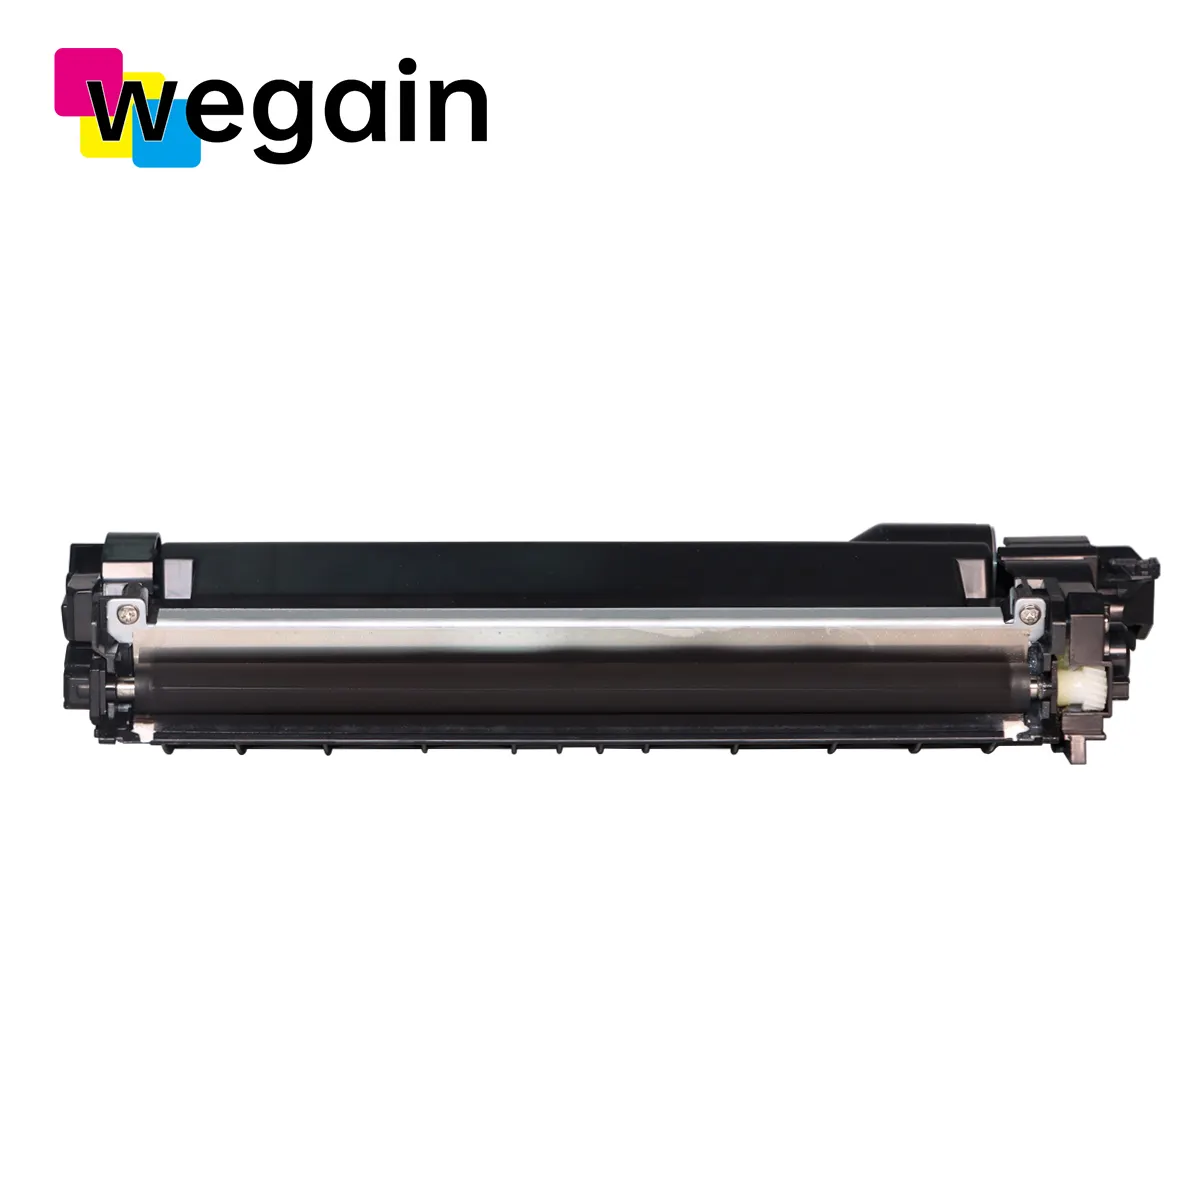 Wegain compatible Toner cartridge TN-2510 for brother DCP-L2600D/DCP-L2620DW/DCP-L2622DW/DCP-L2627DW/DCP-L2627DWXL/DCP-L2627DWE